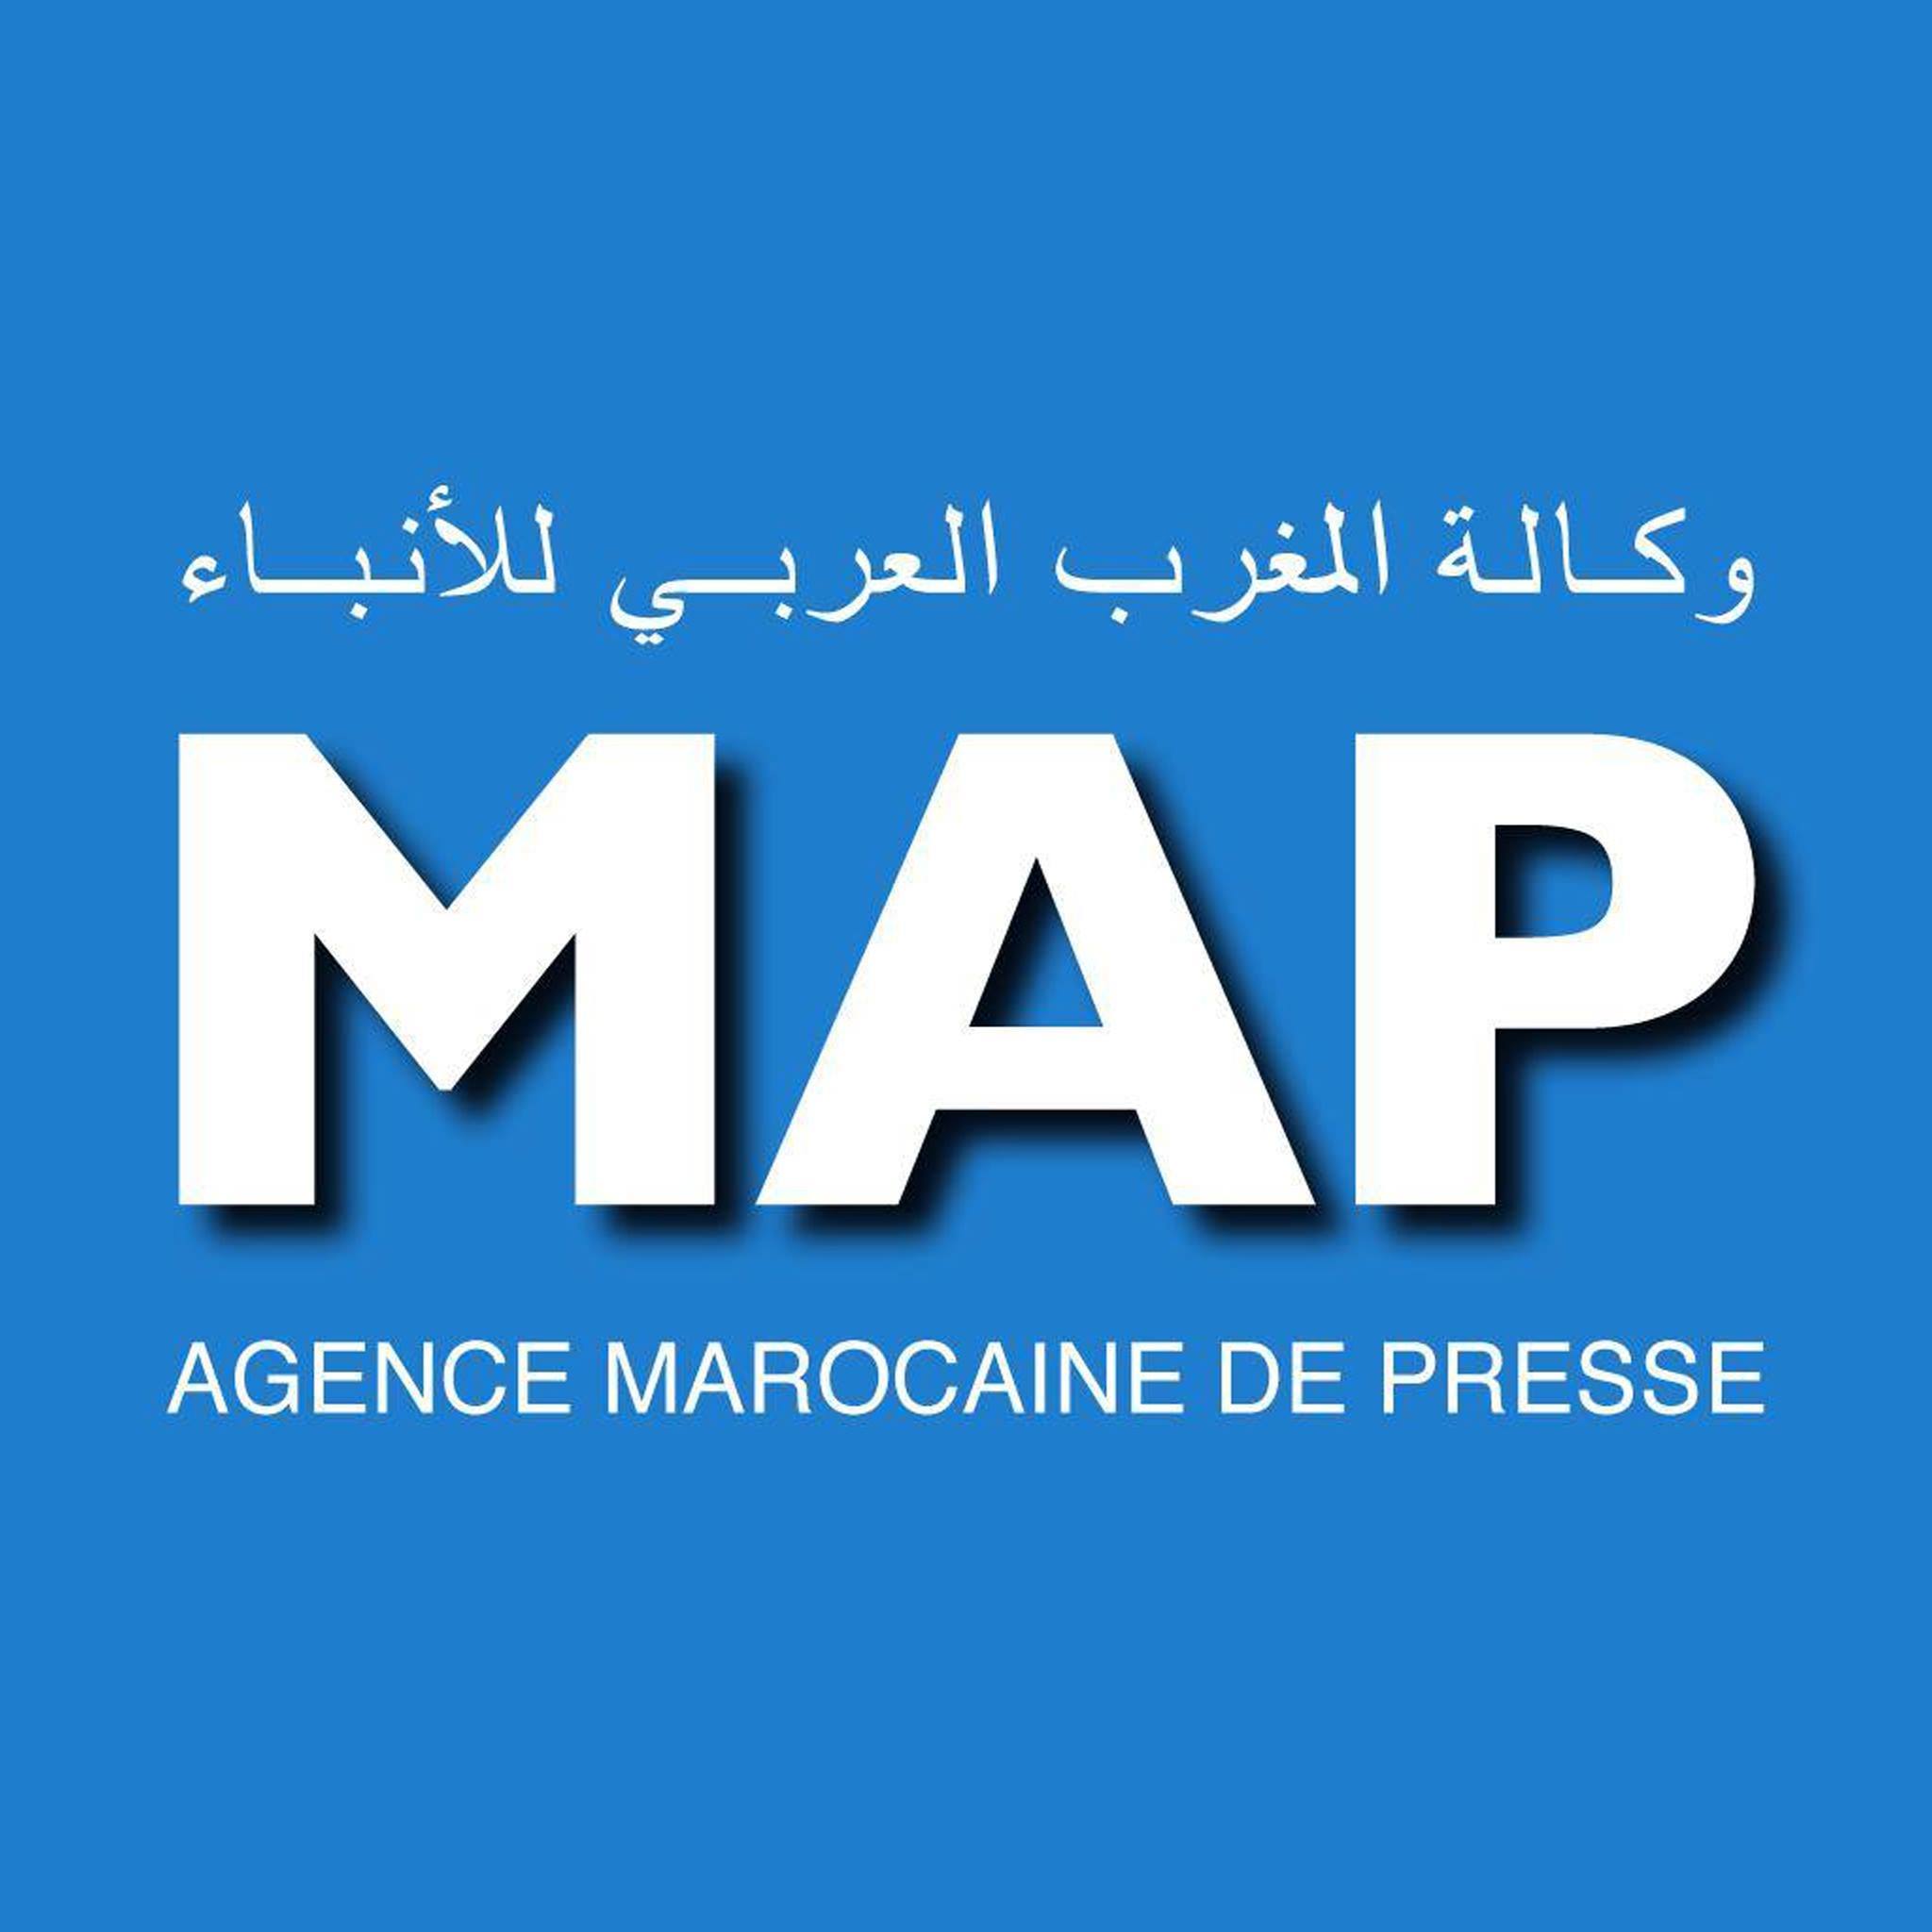 Maghreb Arabe Press (MAP)